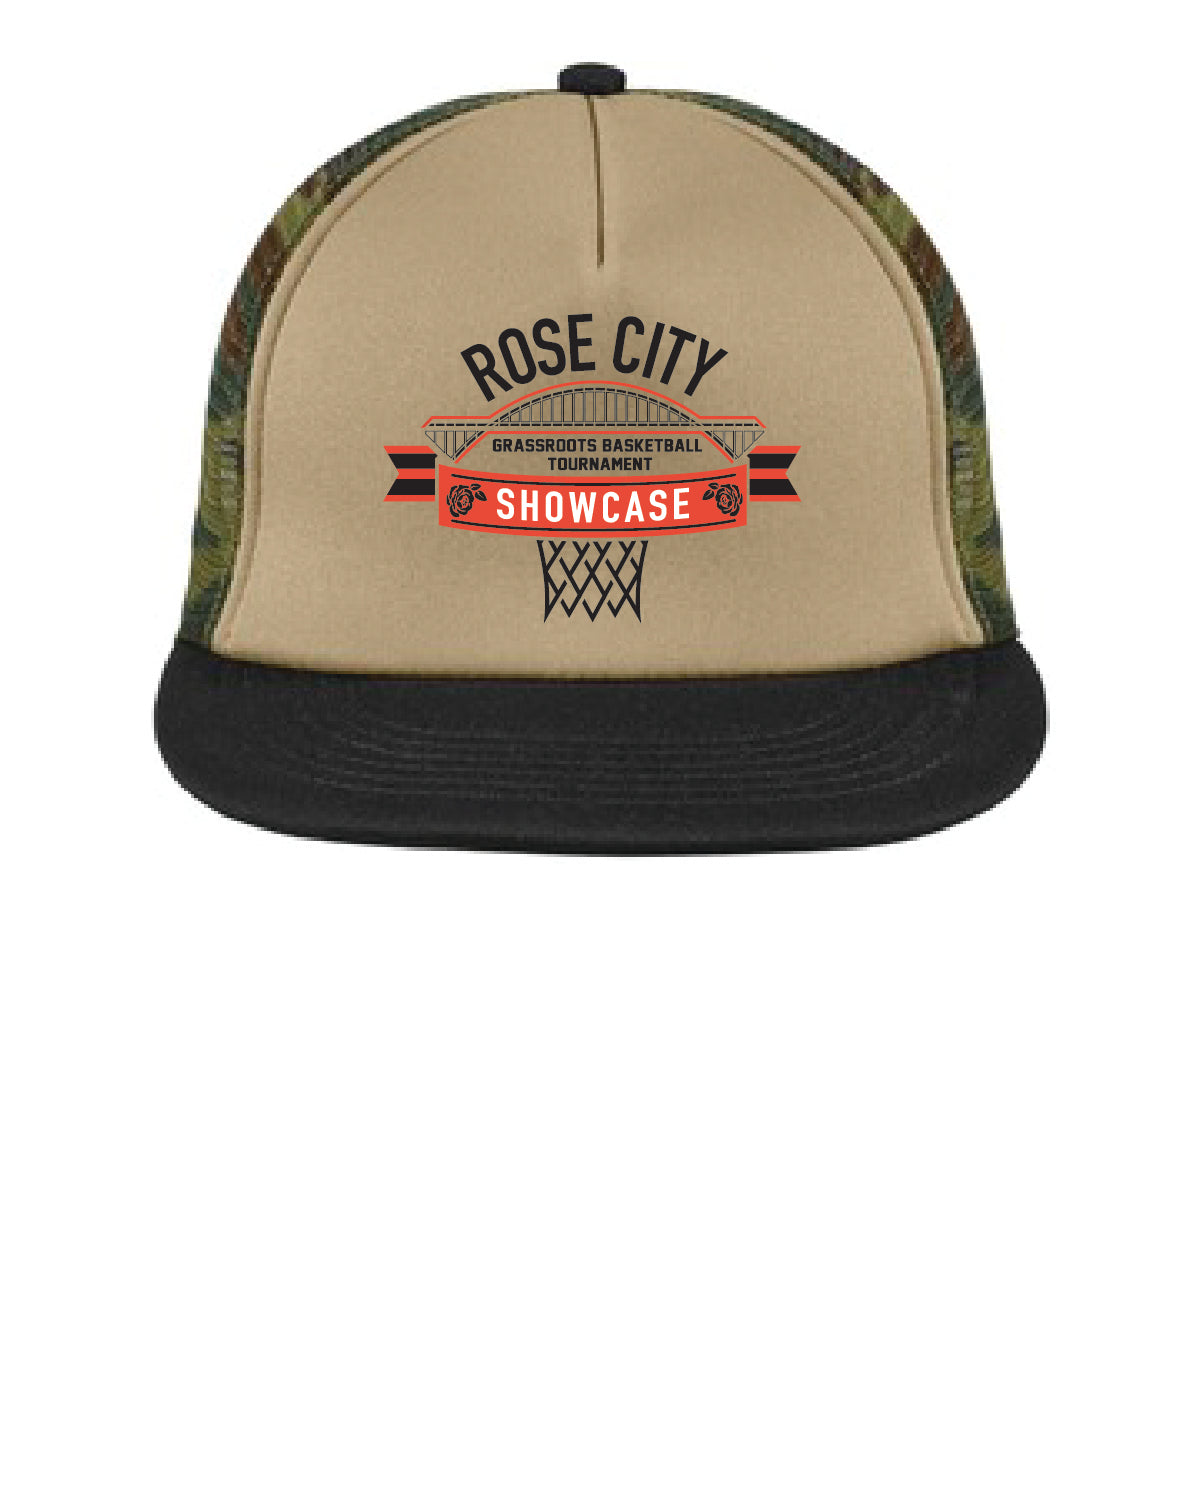 Rose City Showcase Trucker Hat